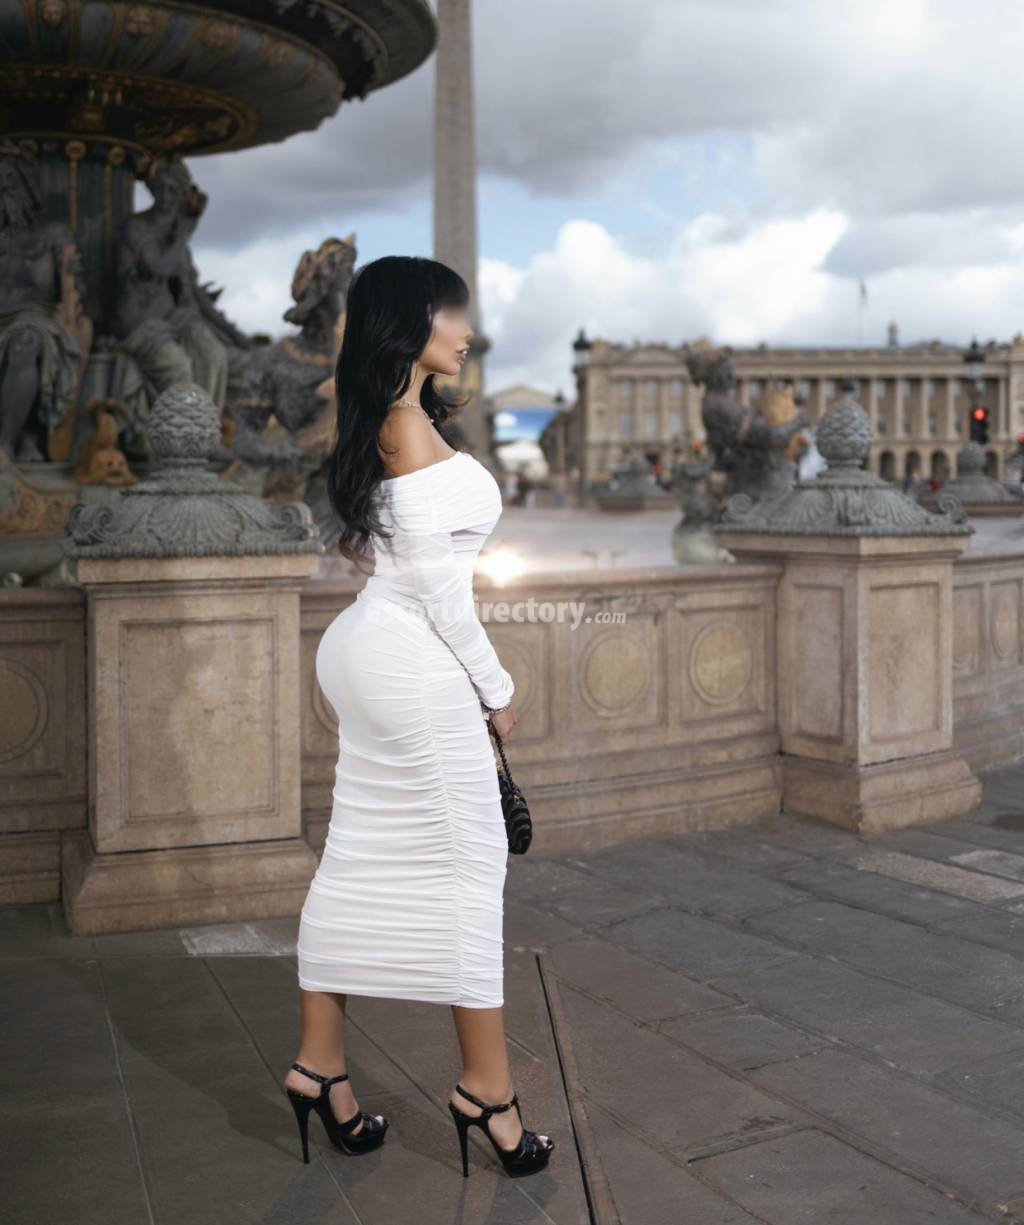 Ayah-Bella Vip Escort escort in Paris offers Kissing services